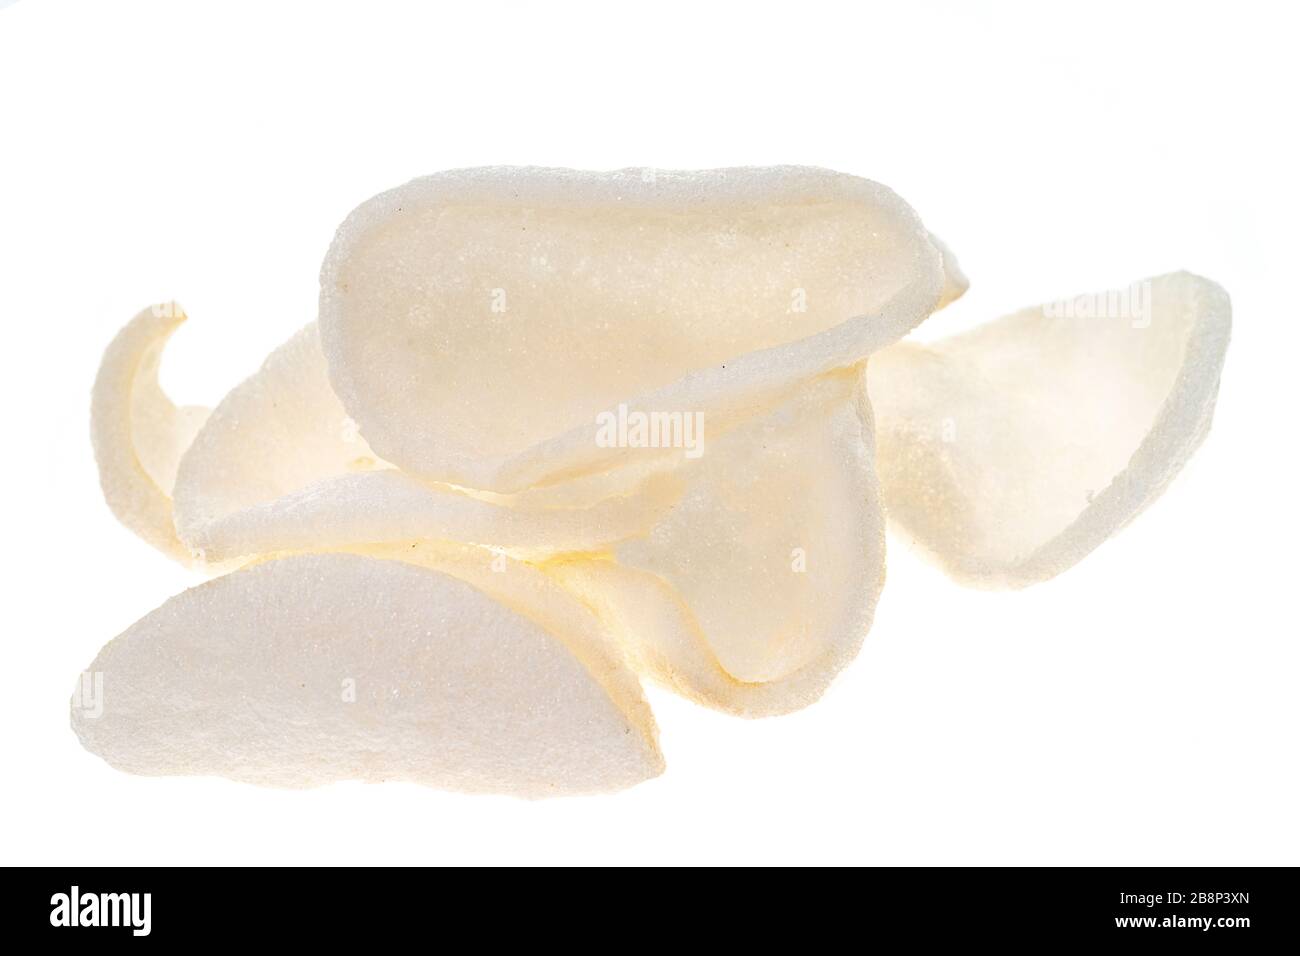 Immagine luminosa di cracker di gamberi o di schegge di gamberi - sfondo bianco Foto Stock